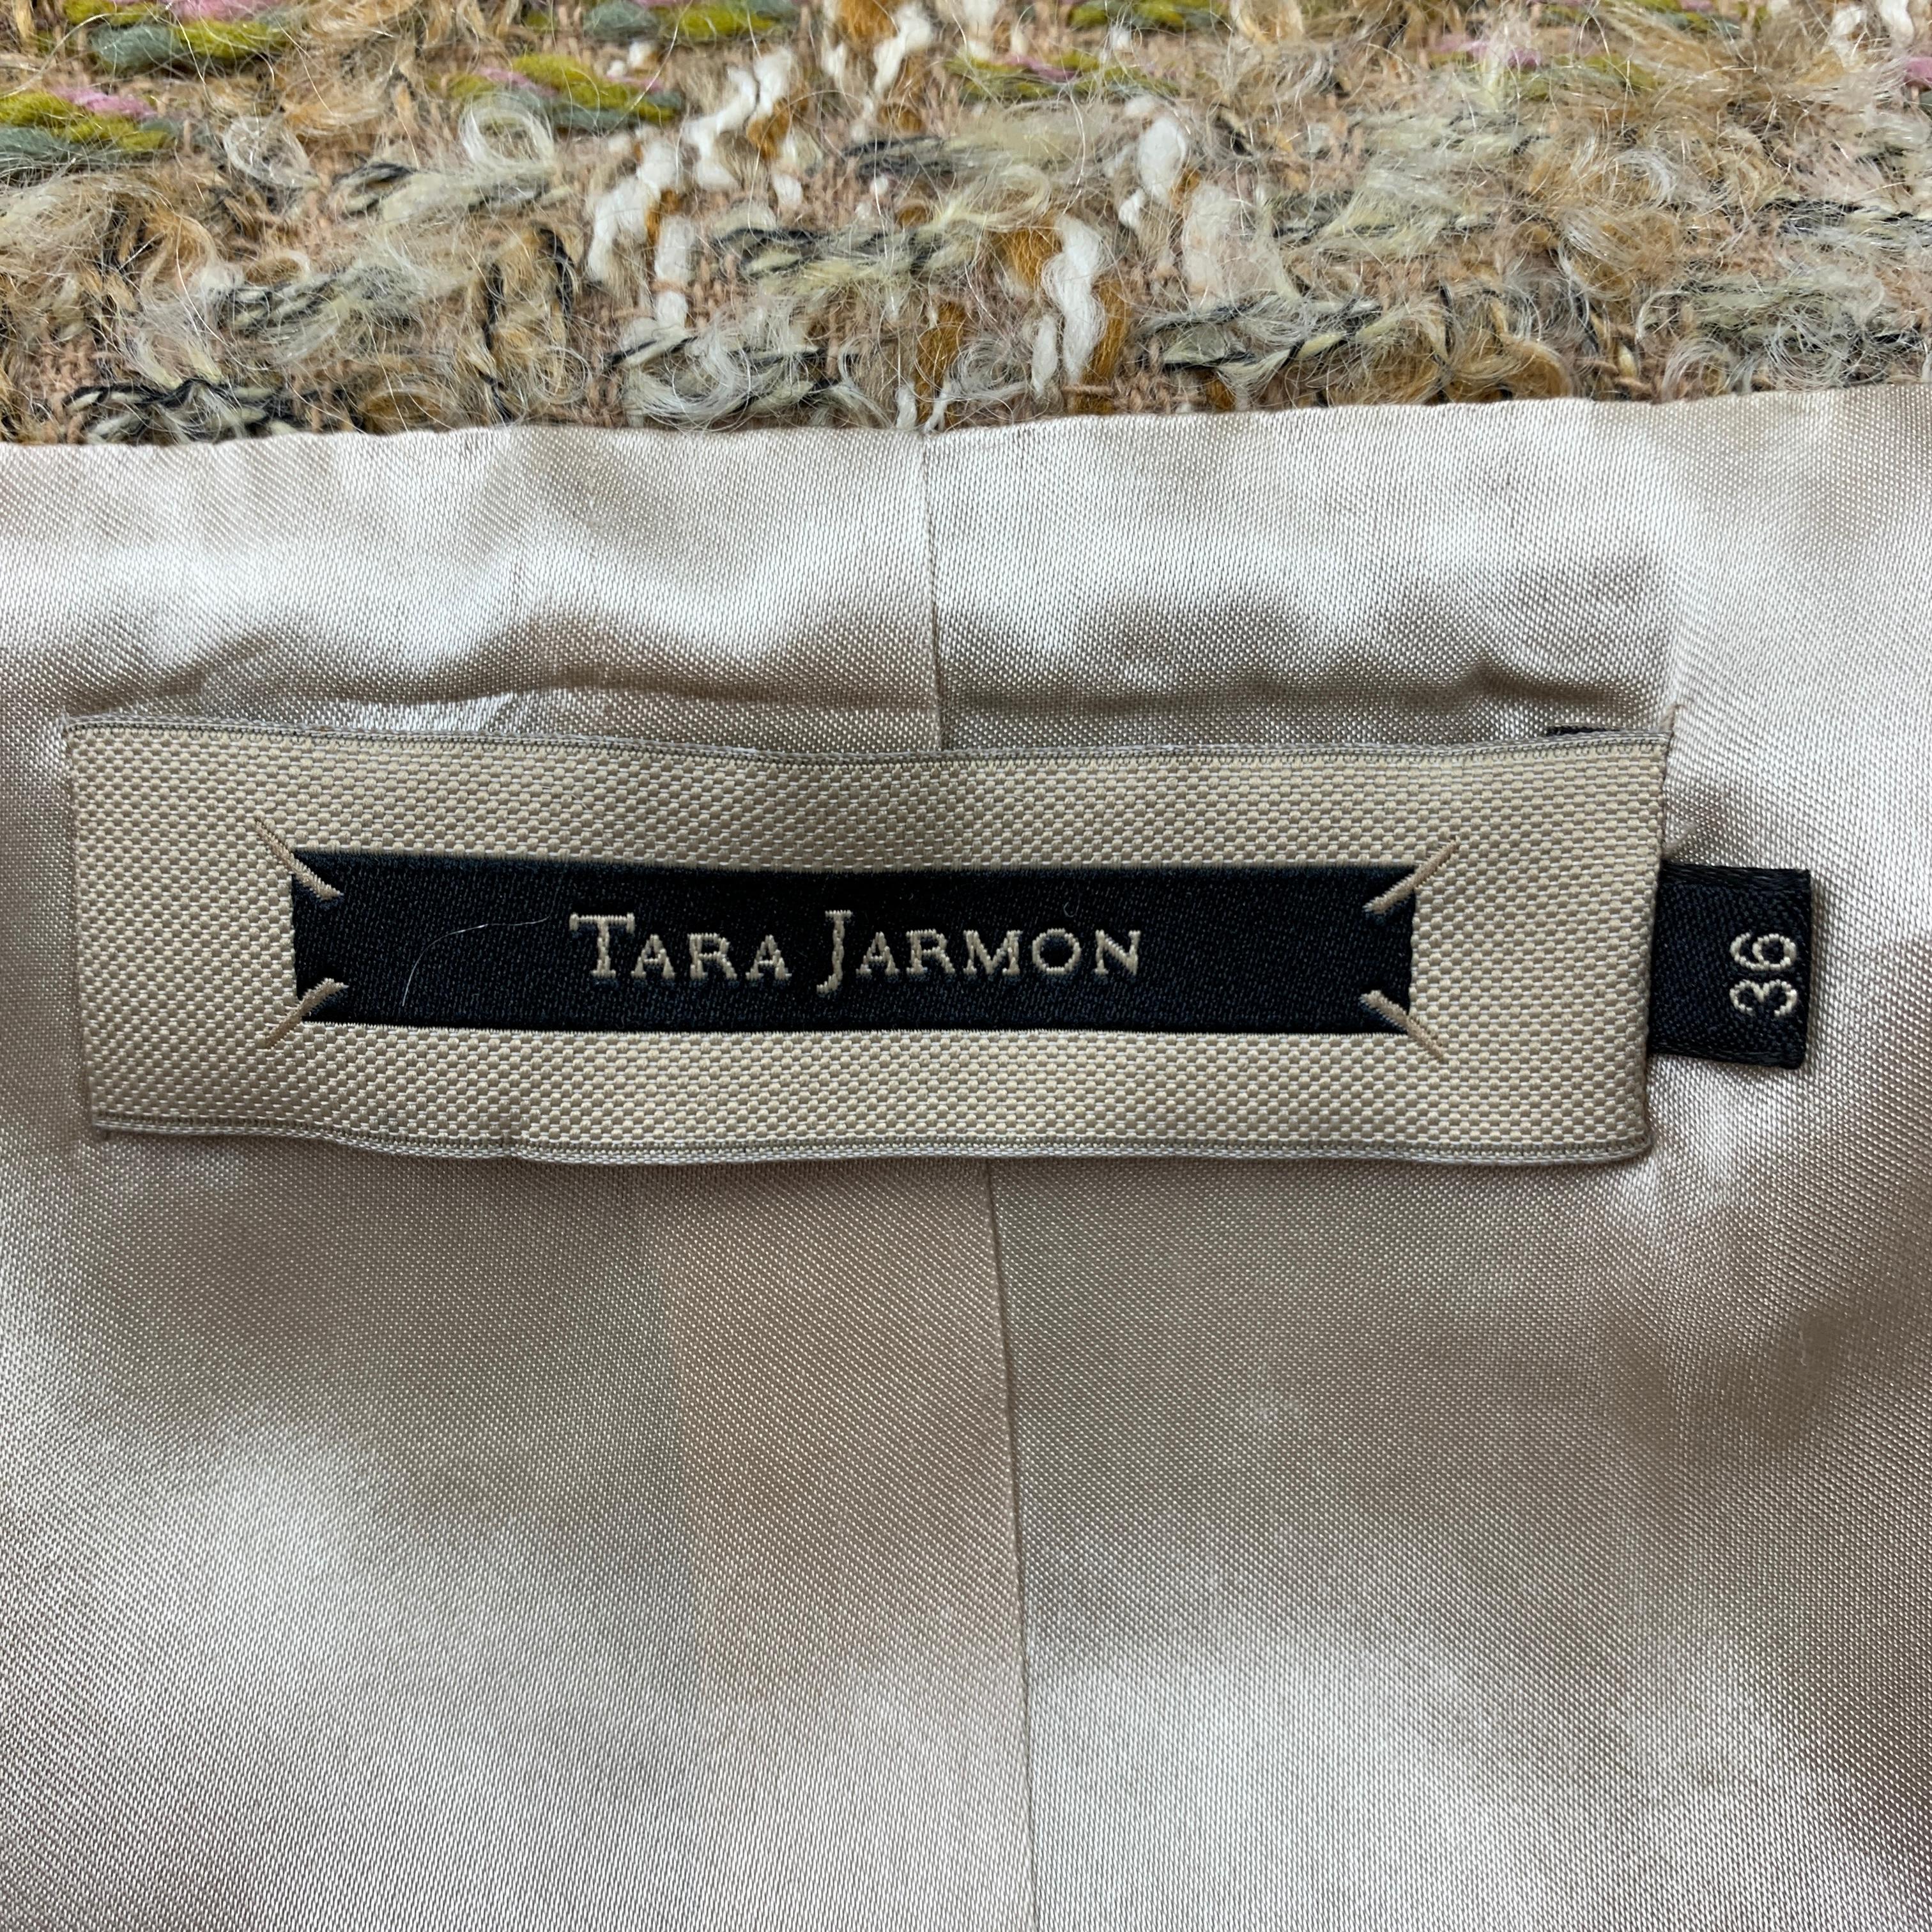 Women's TARA JARMON Size 4 Beige & Cream Boucle Wool Blend Jacket